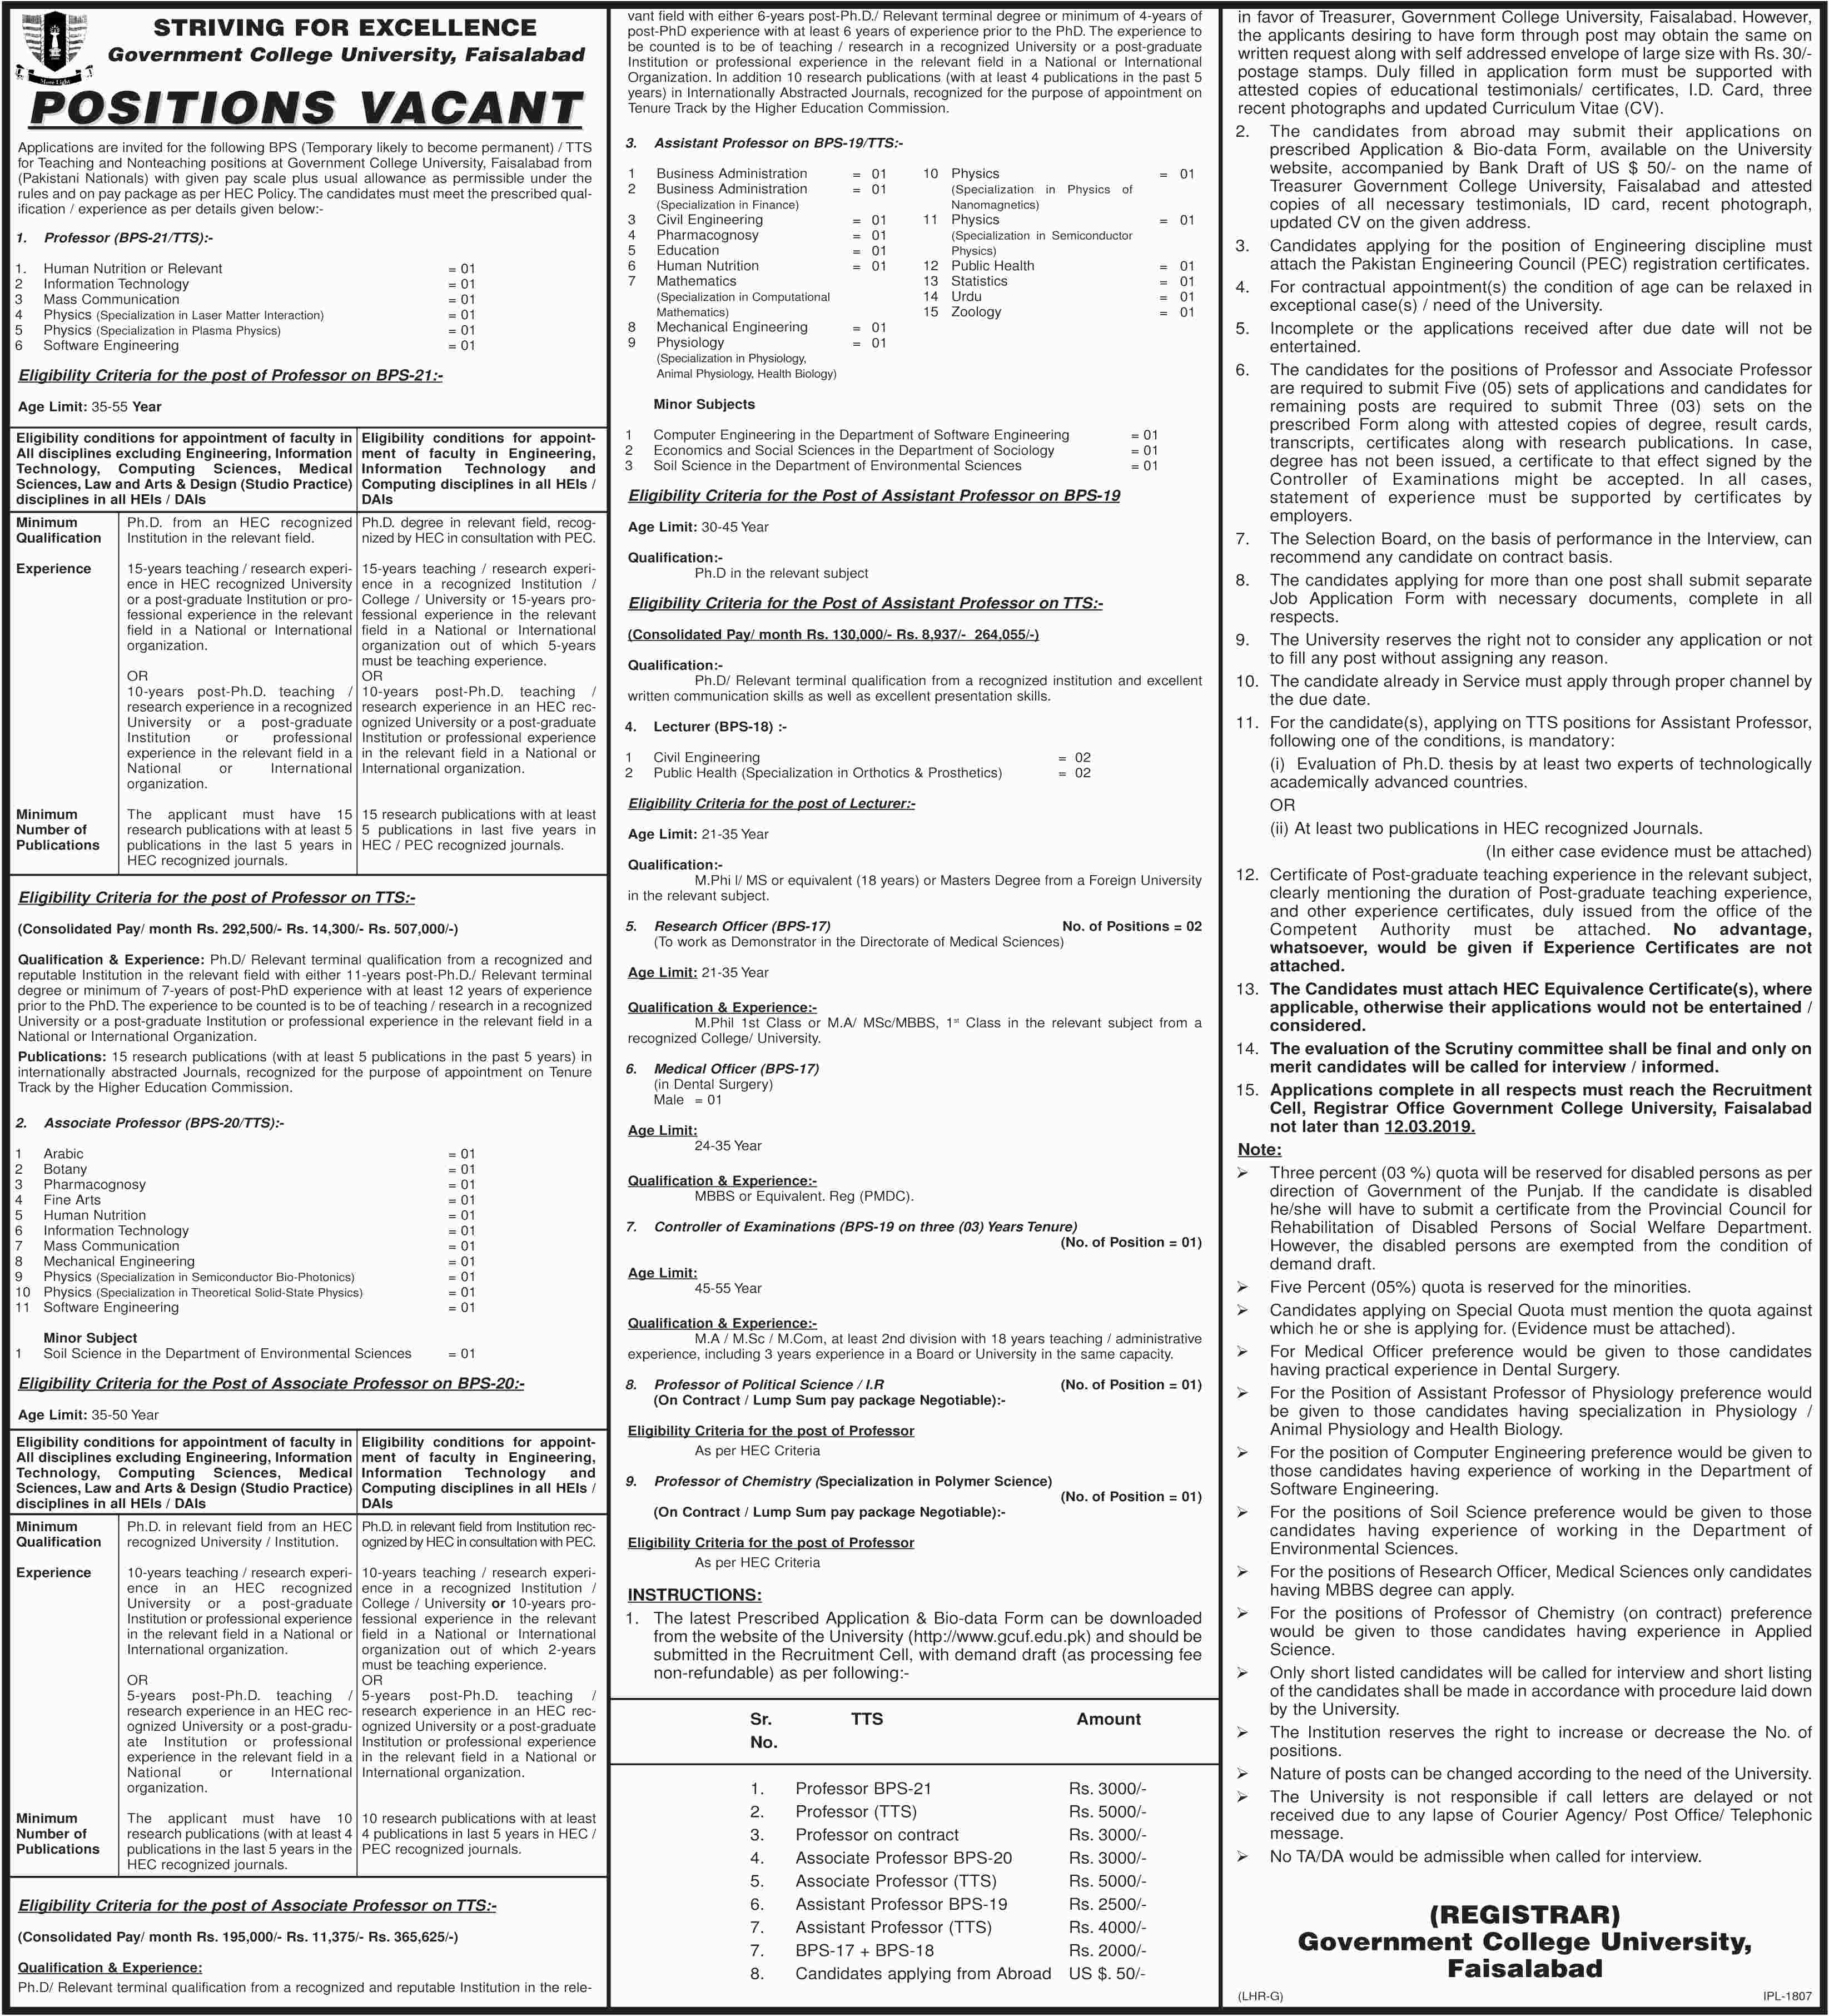 Govt College GC University Faisalabad jobs 2019